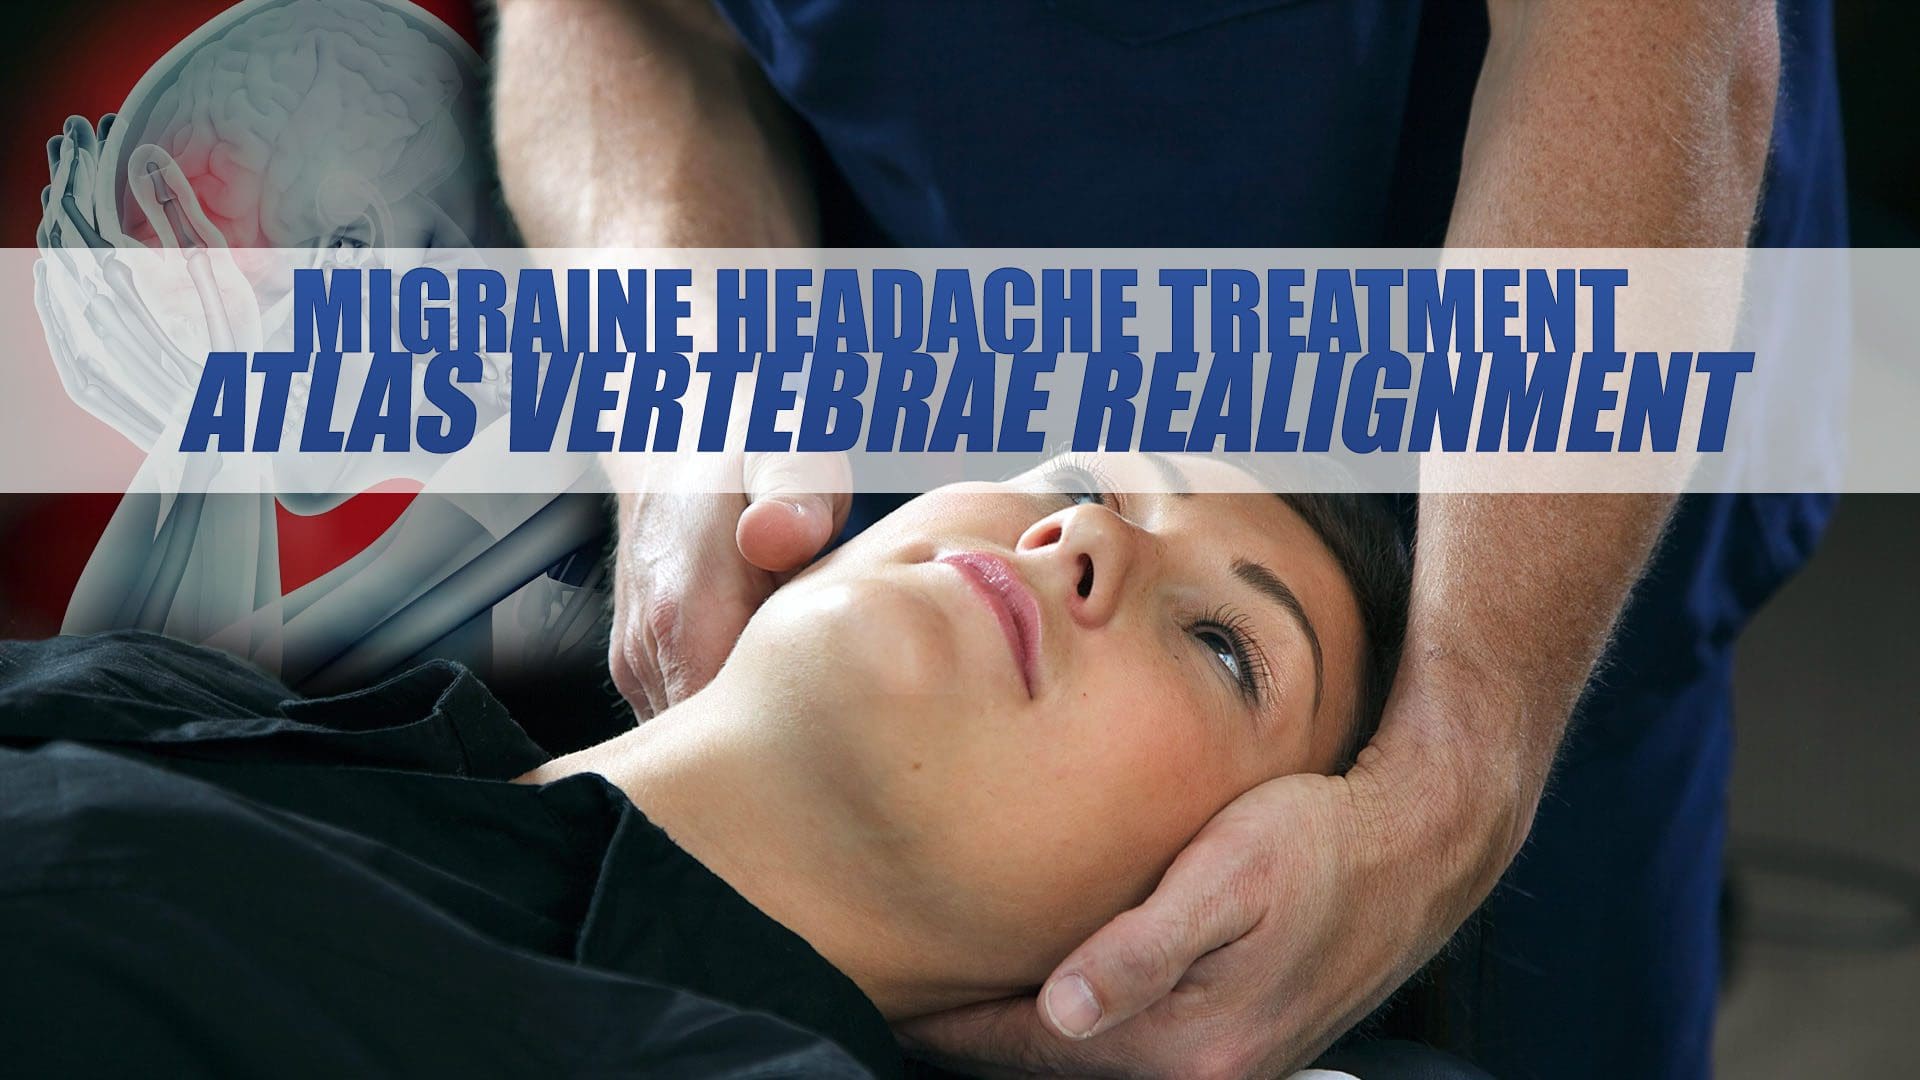 migraine-headache-treatment-atlas-vertebrae-realignment-el-paso-tx-chiropractor-cover-image